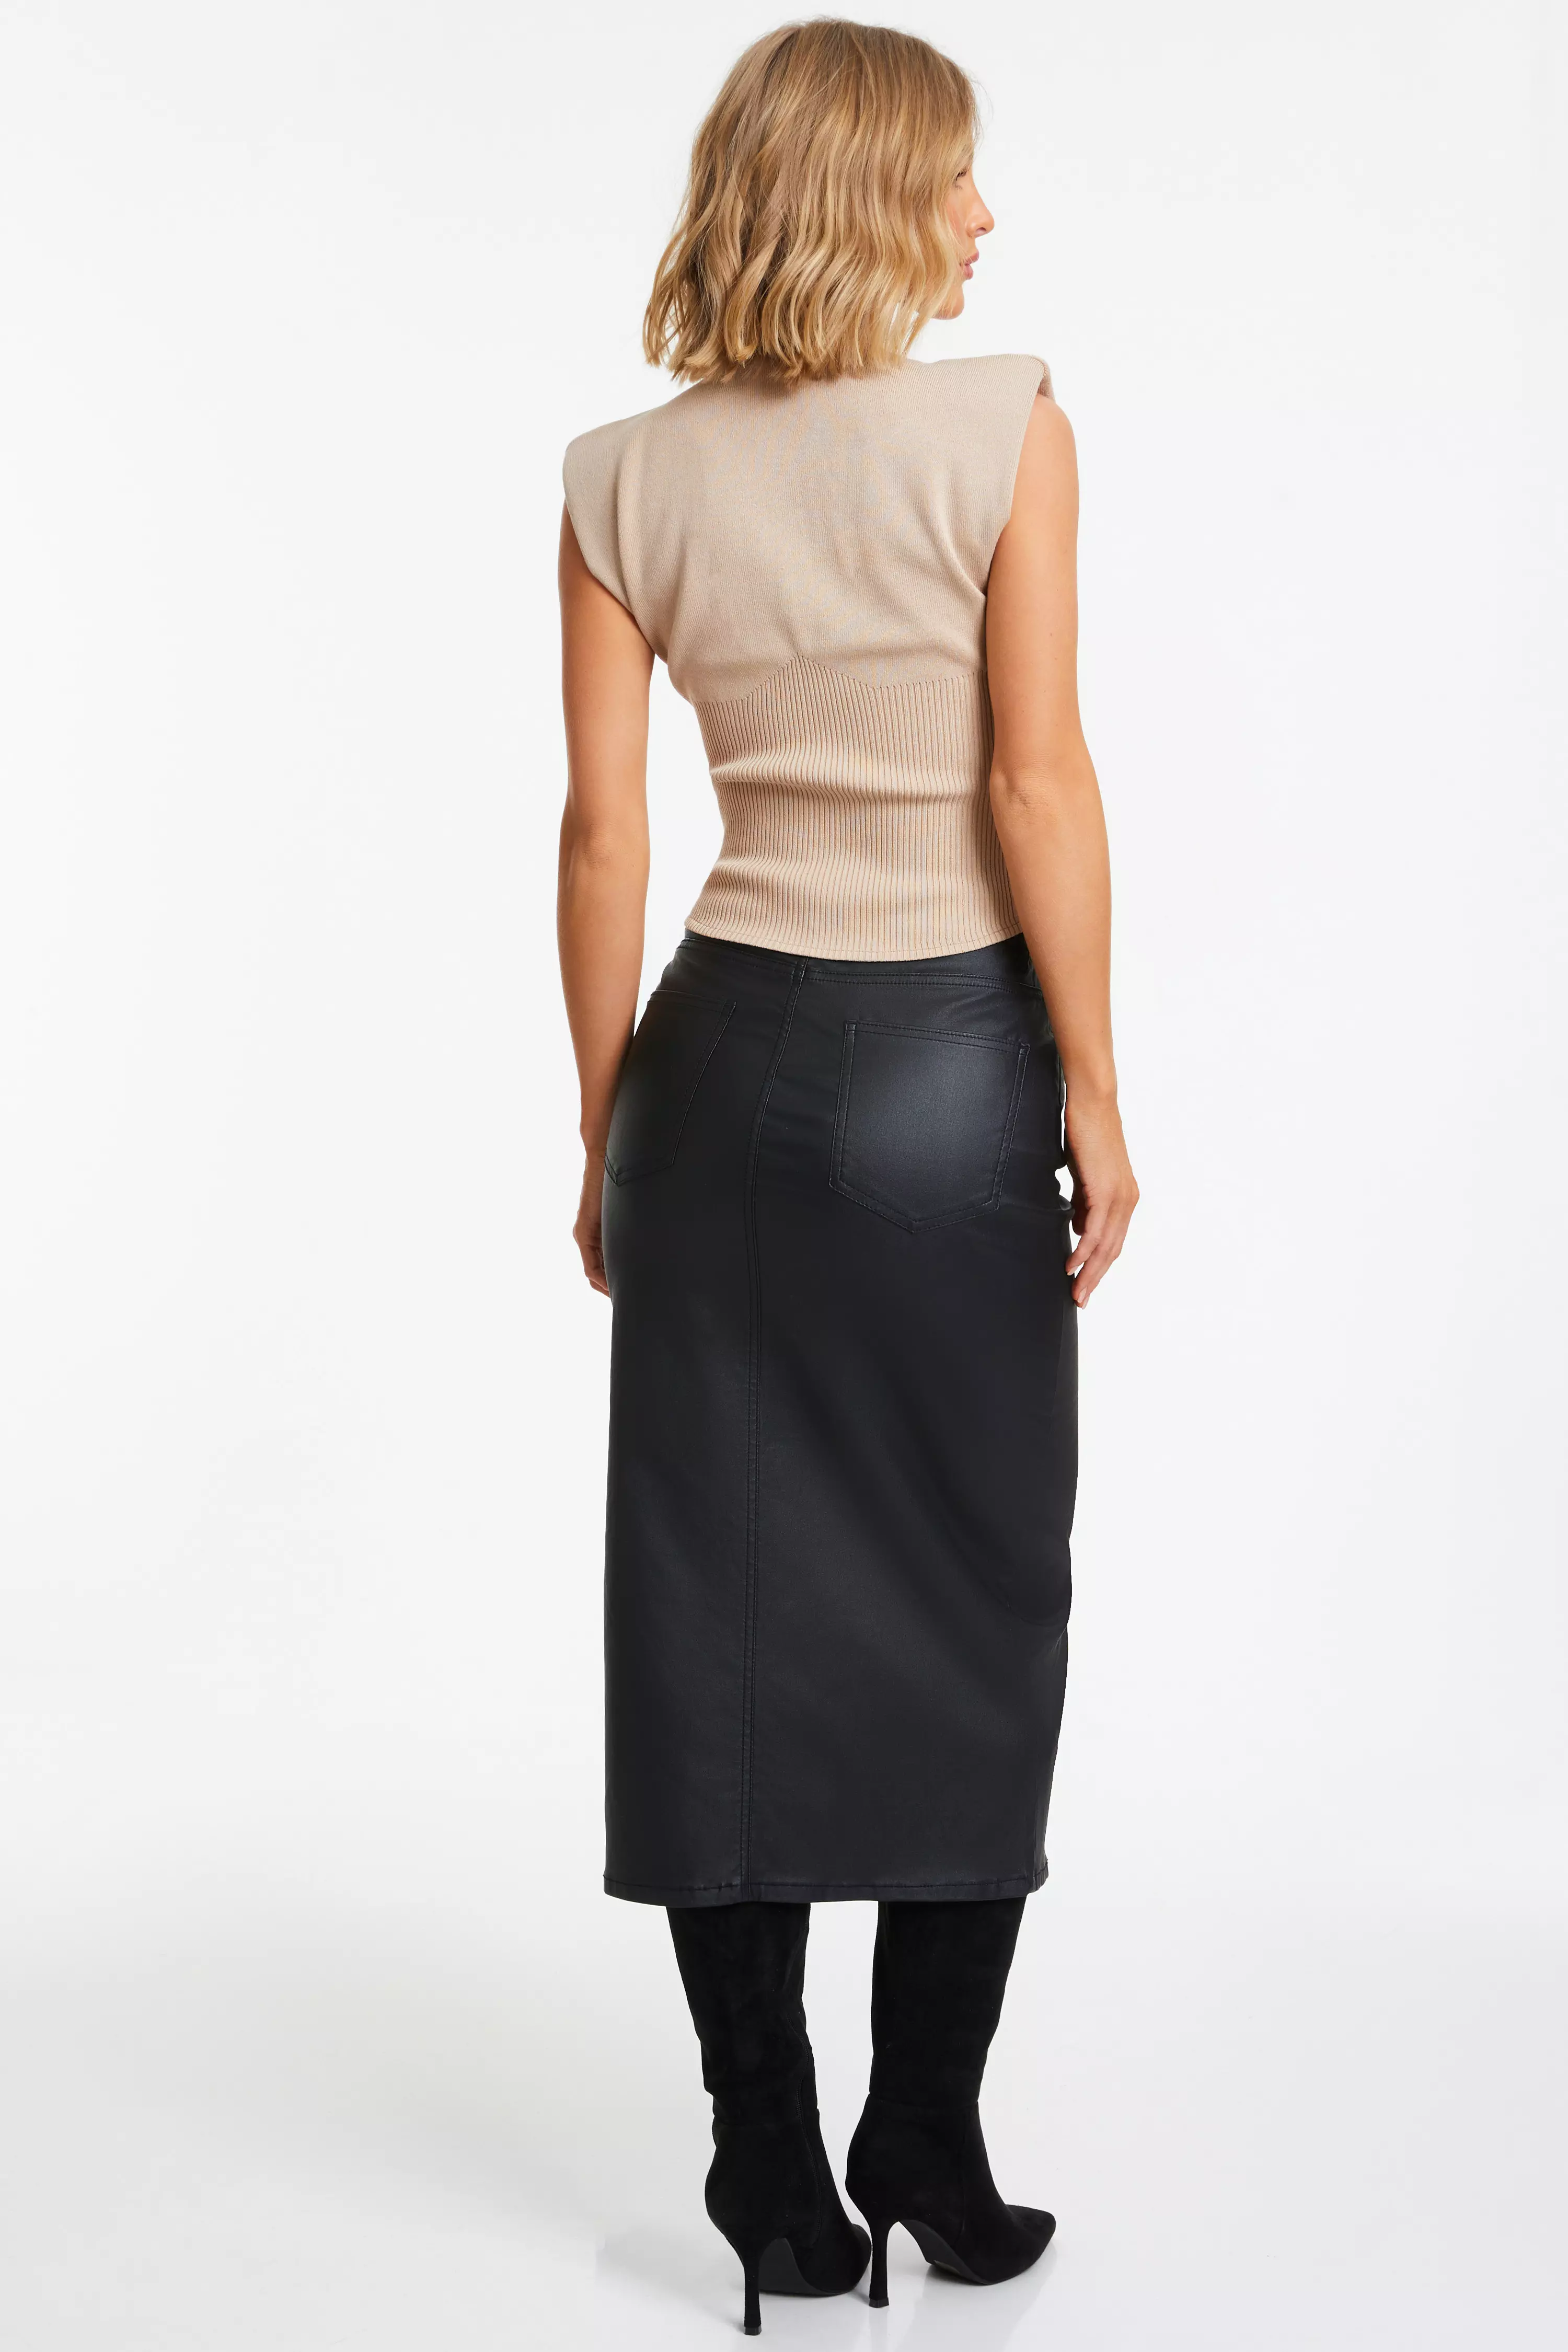 Black Faux Leather Midi Skirt - QUIZ Clothing